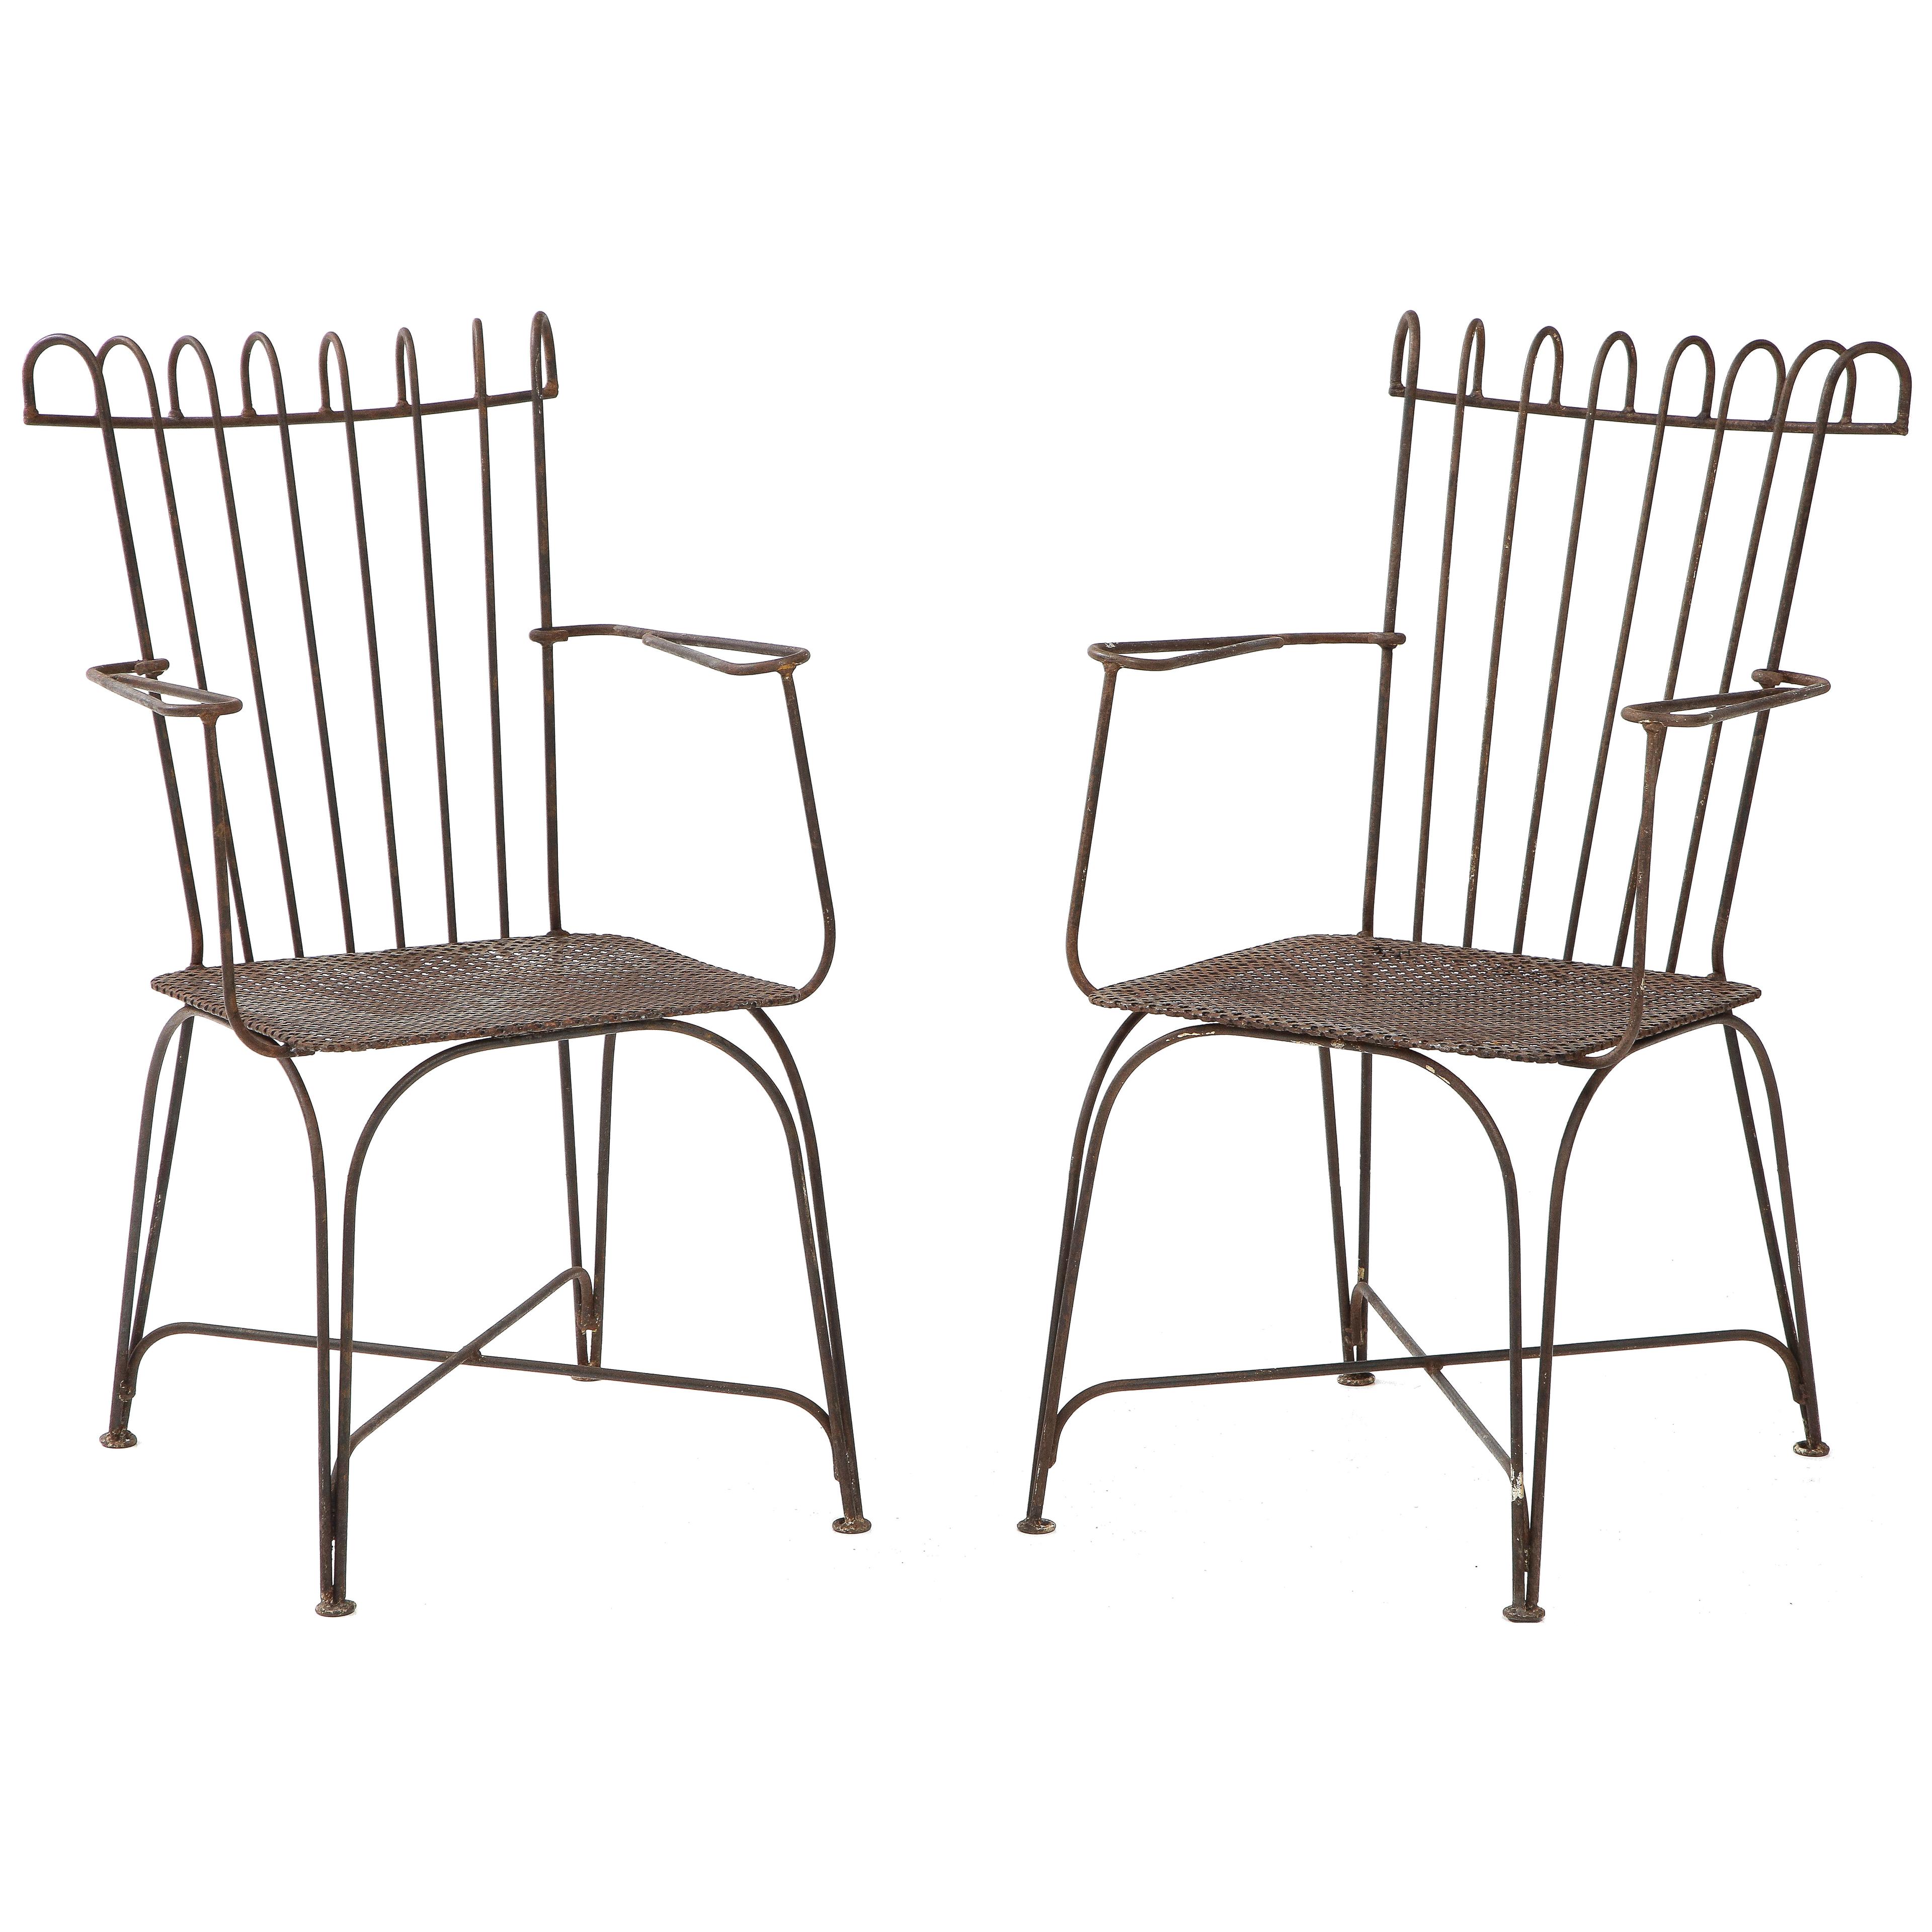 Pair of Mathieu Matégot Chairs, France, c. 1950